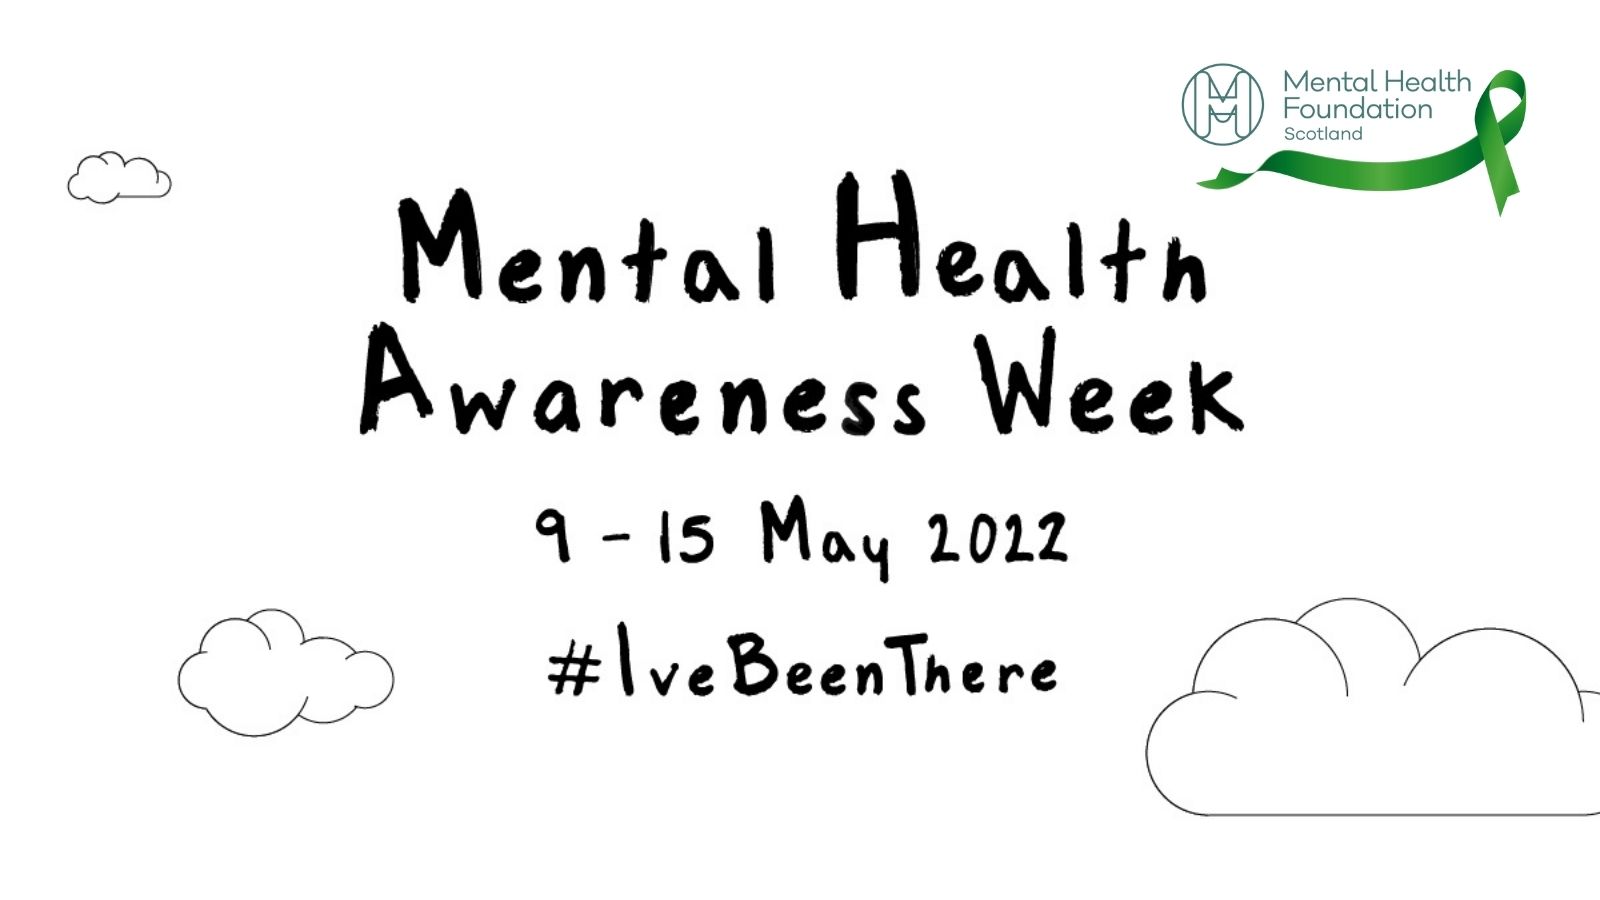 This year's Mental Health Awareness Week runs from 9 to 15 May 2022